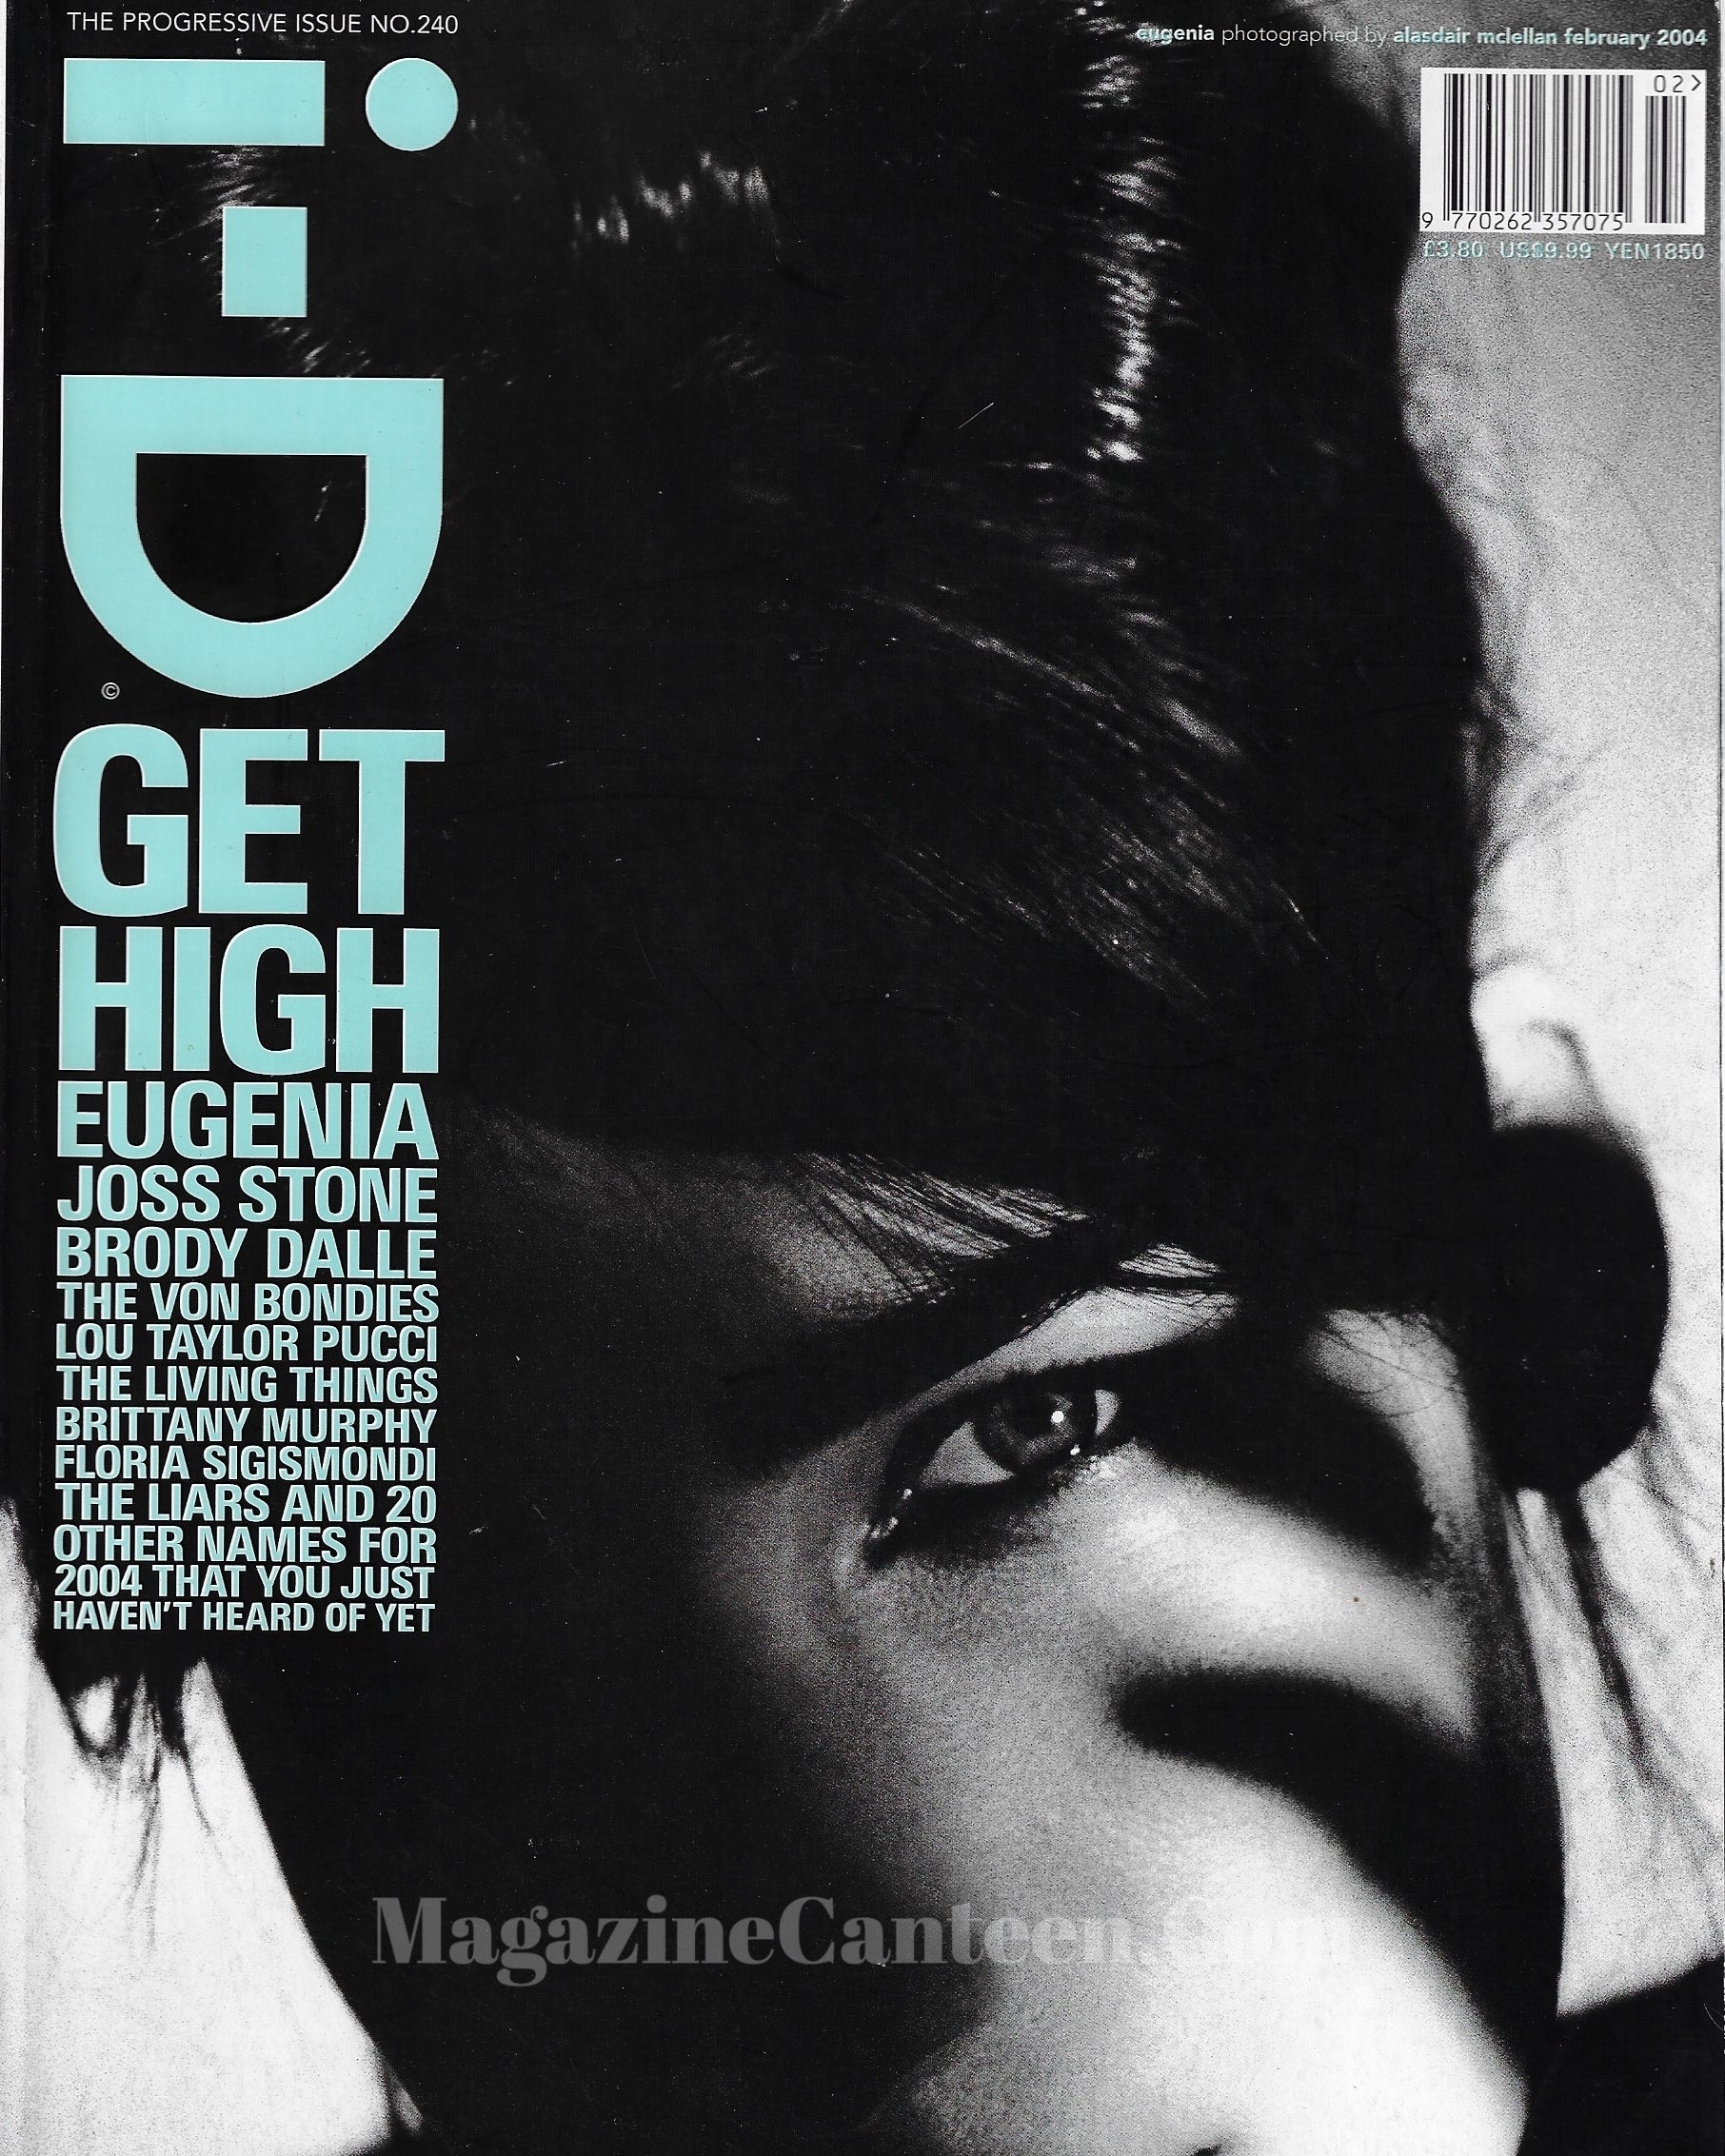 I-D Magazine 240 - Eugenia Voldodina 2004